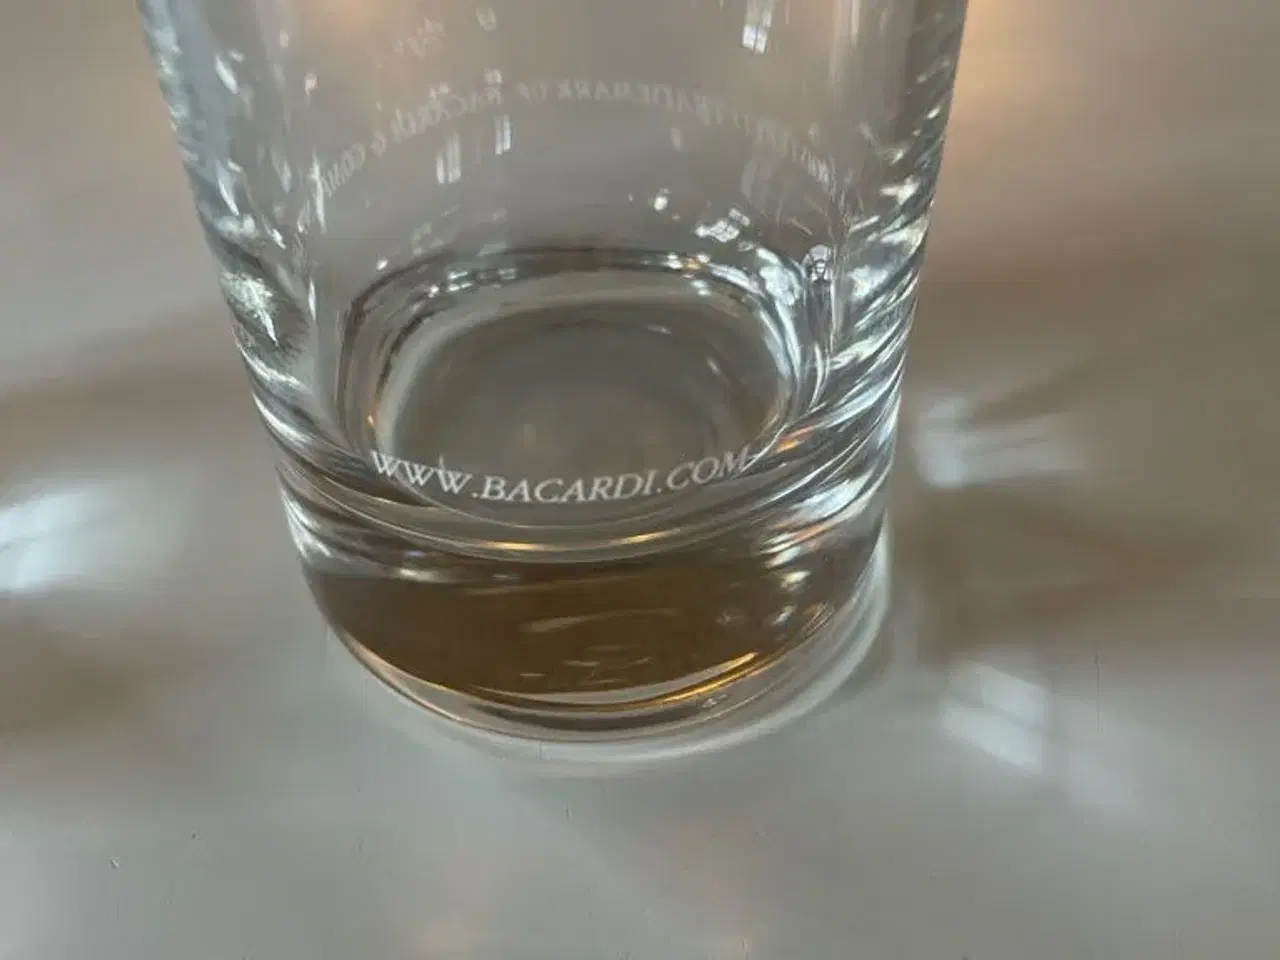 Billede 3 - Bacardi sjus glas.